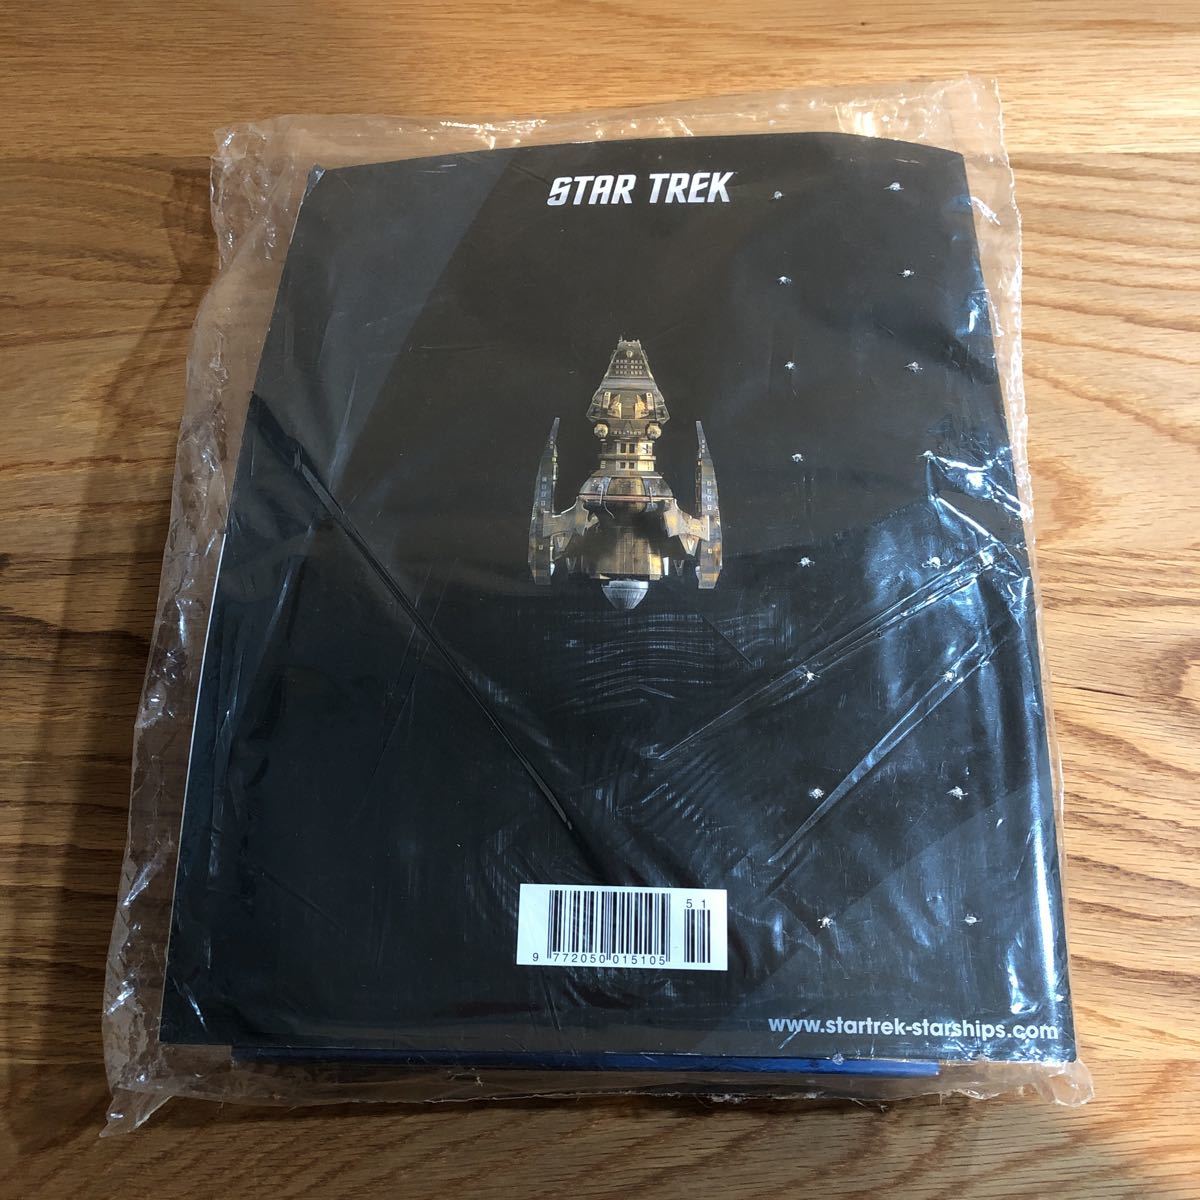 STAR TREK/ Star Trek Star sip collection 51 [WARSHIP] figure EAGLEMOSS